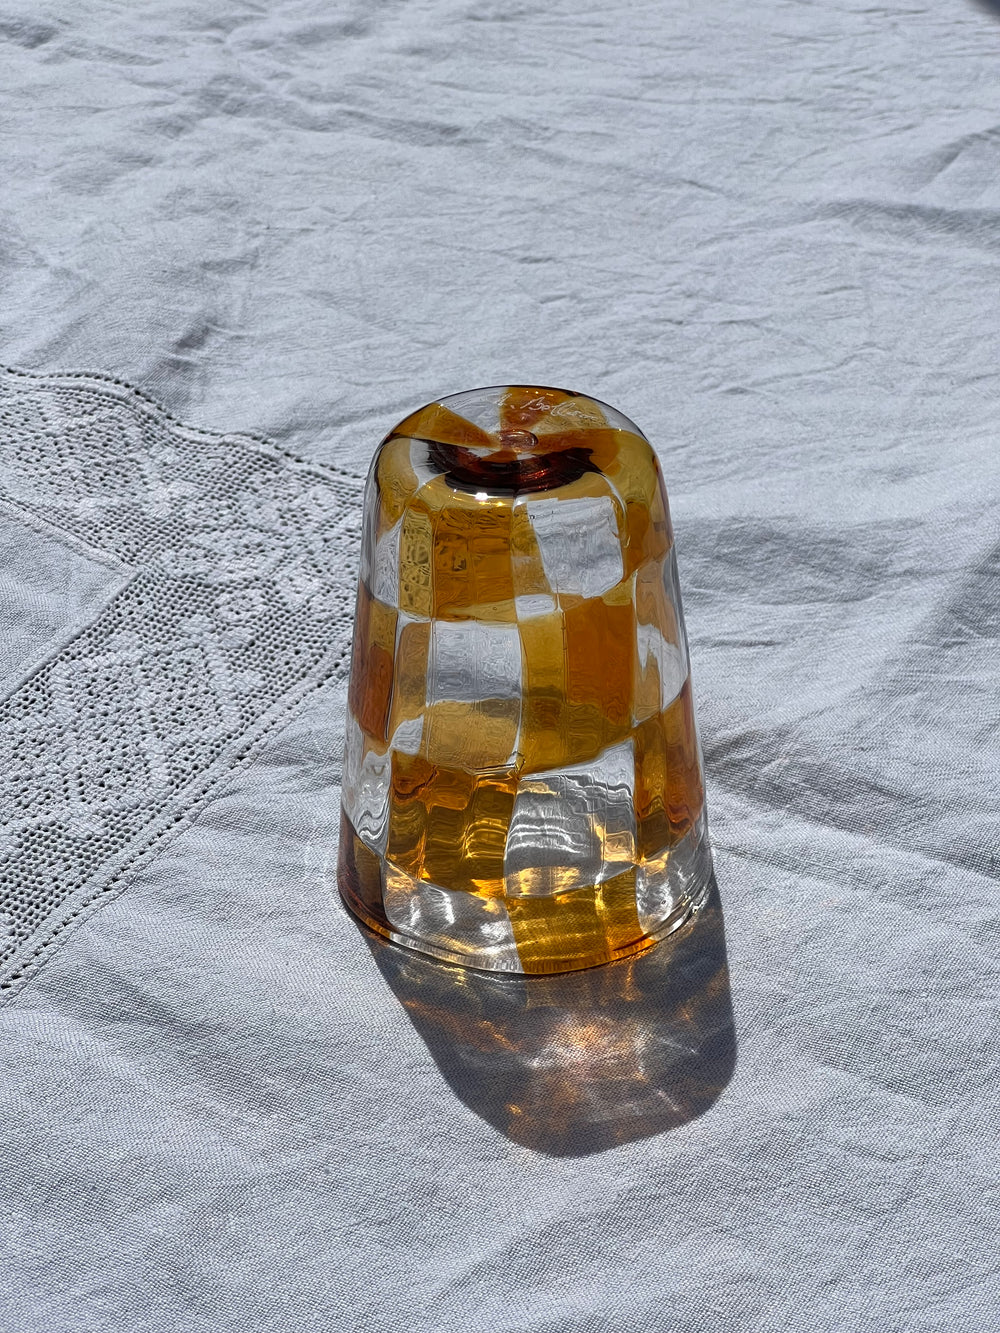 Håndblæst Murano Glas med skaktern i topasfarvet (gylden gul) Murano